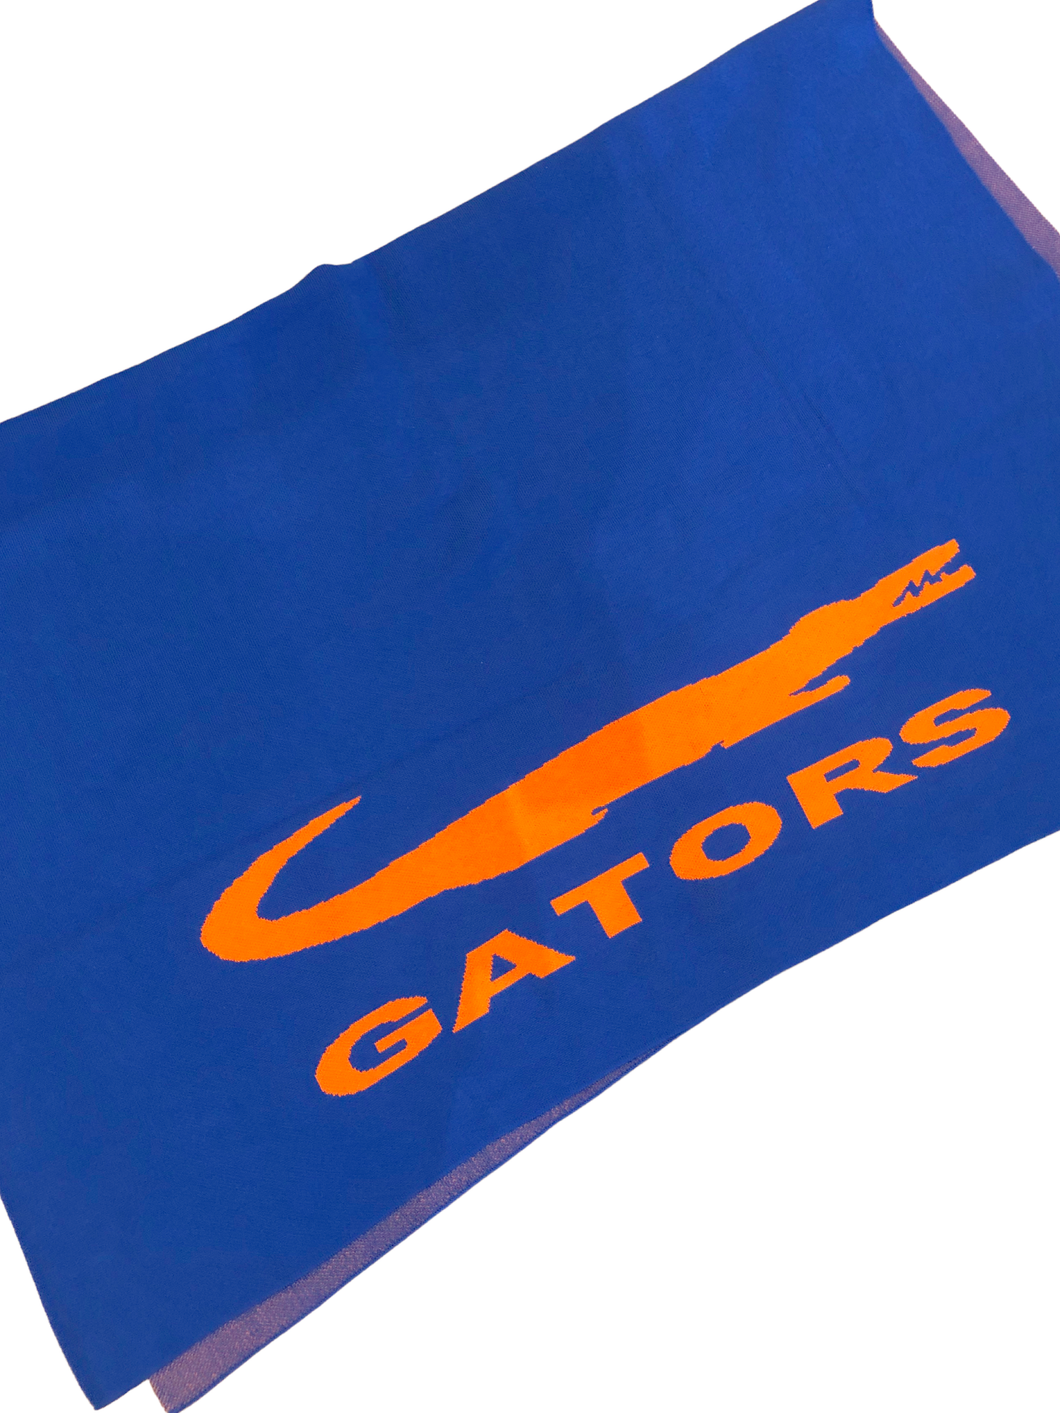 Florida Gators Blanket - Royal Blue w/ Orange